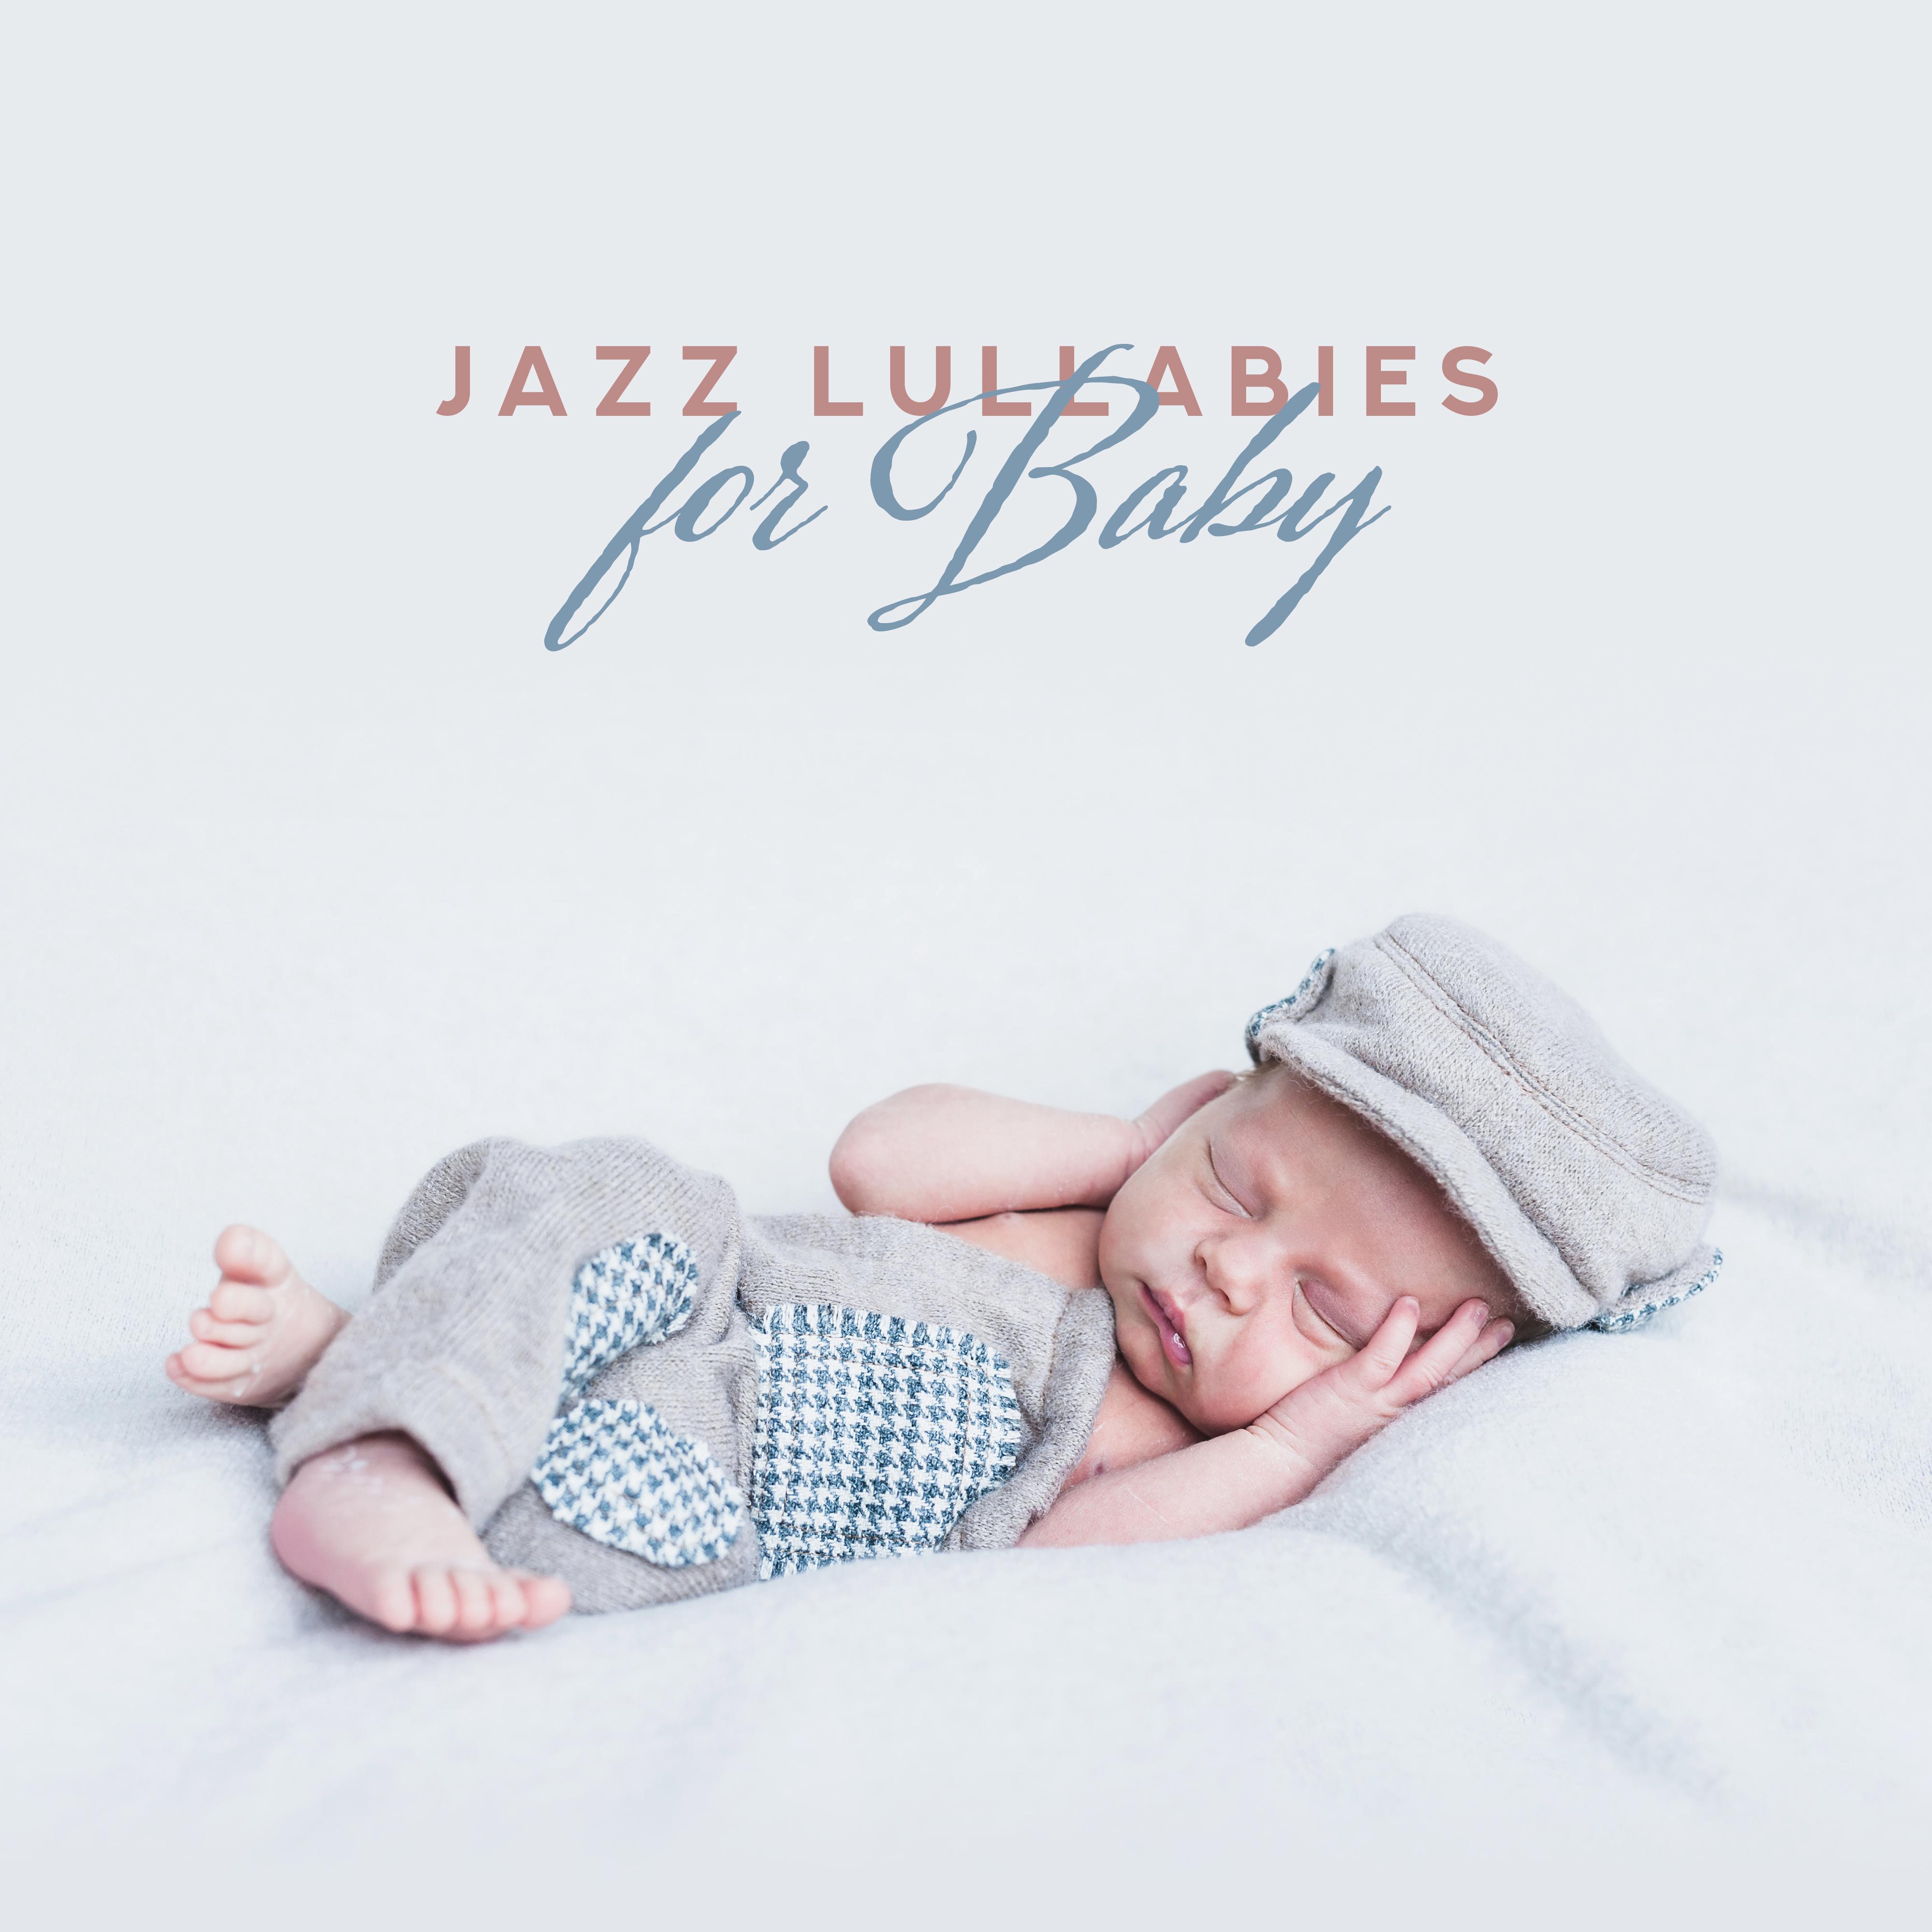 Jazz Lullabies for Baby